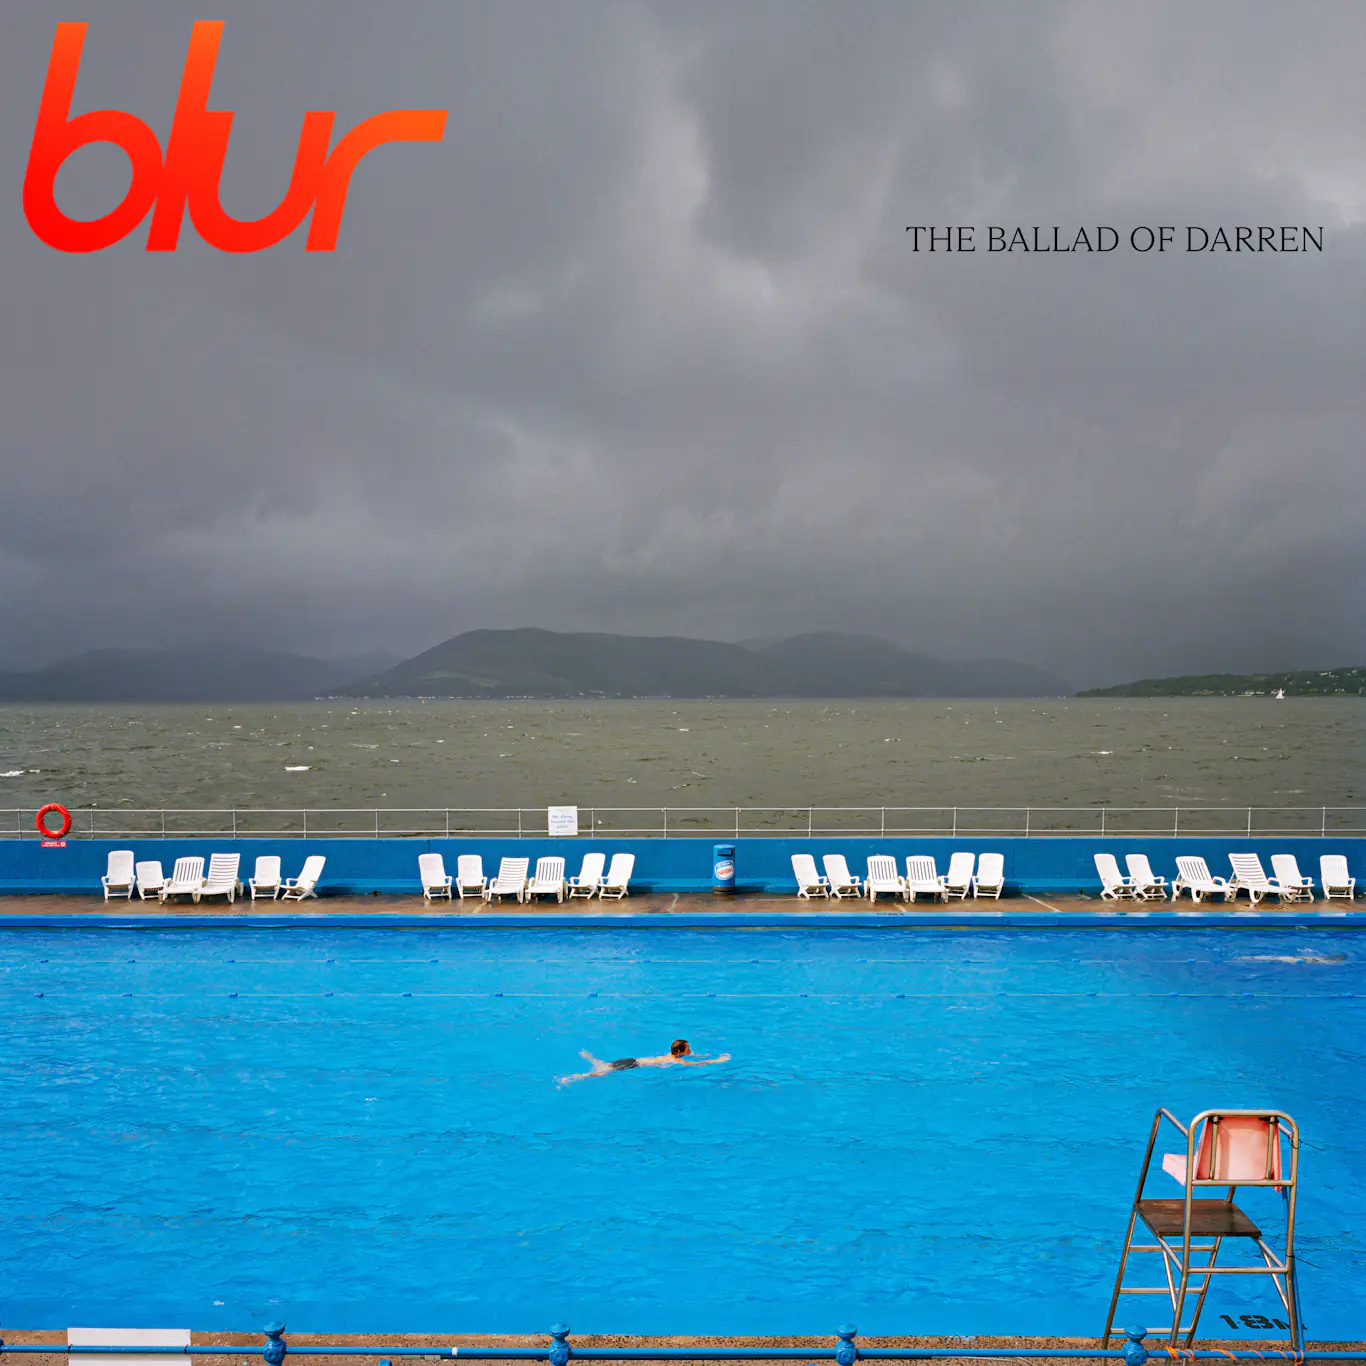 ALBUM REVIEW: Blur – The Ballad of Darren